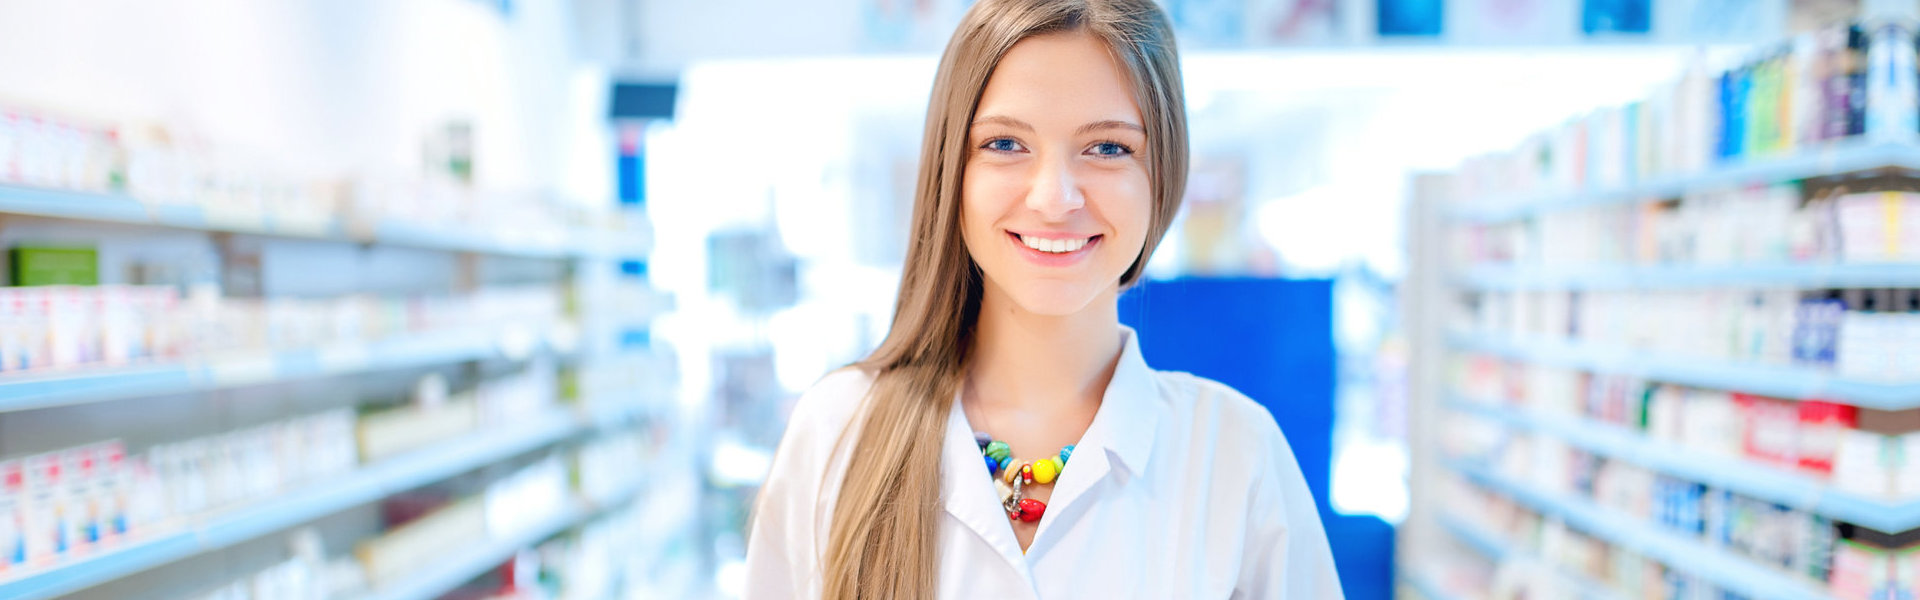 woman standing in pharmacy drugstore